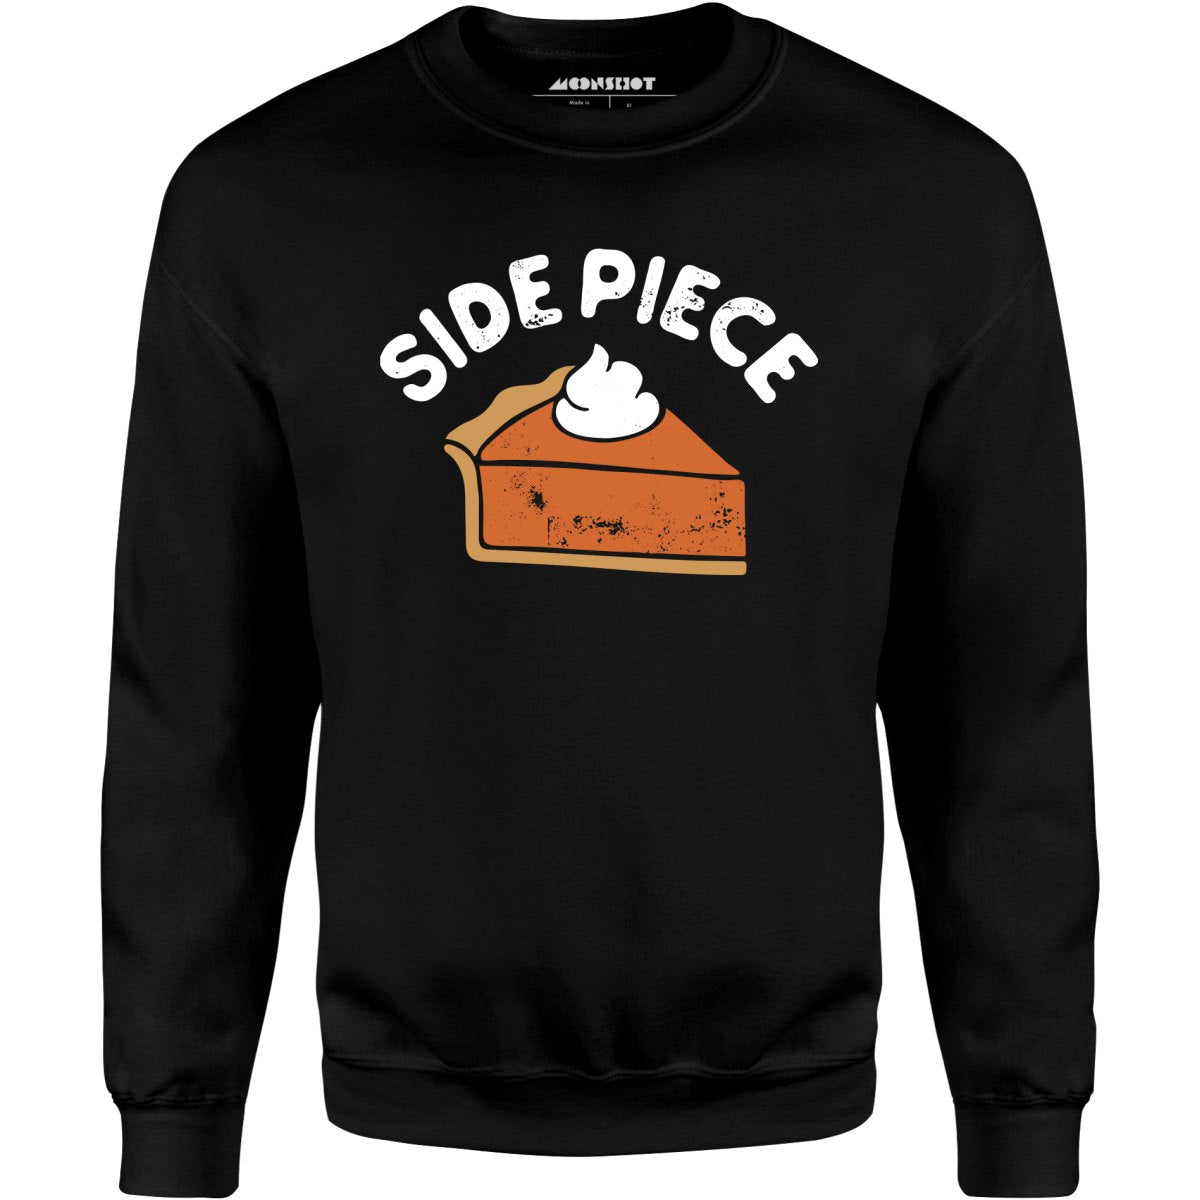 Side Piece - Unisex Sweatshirt